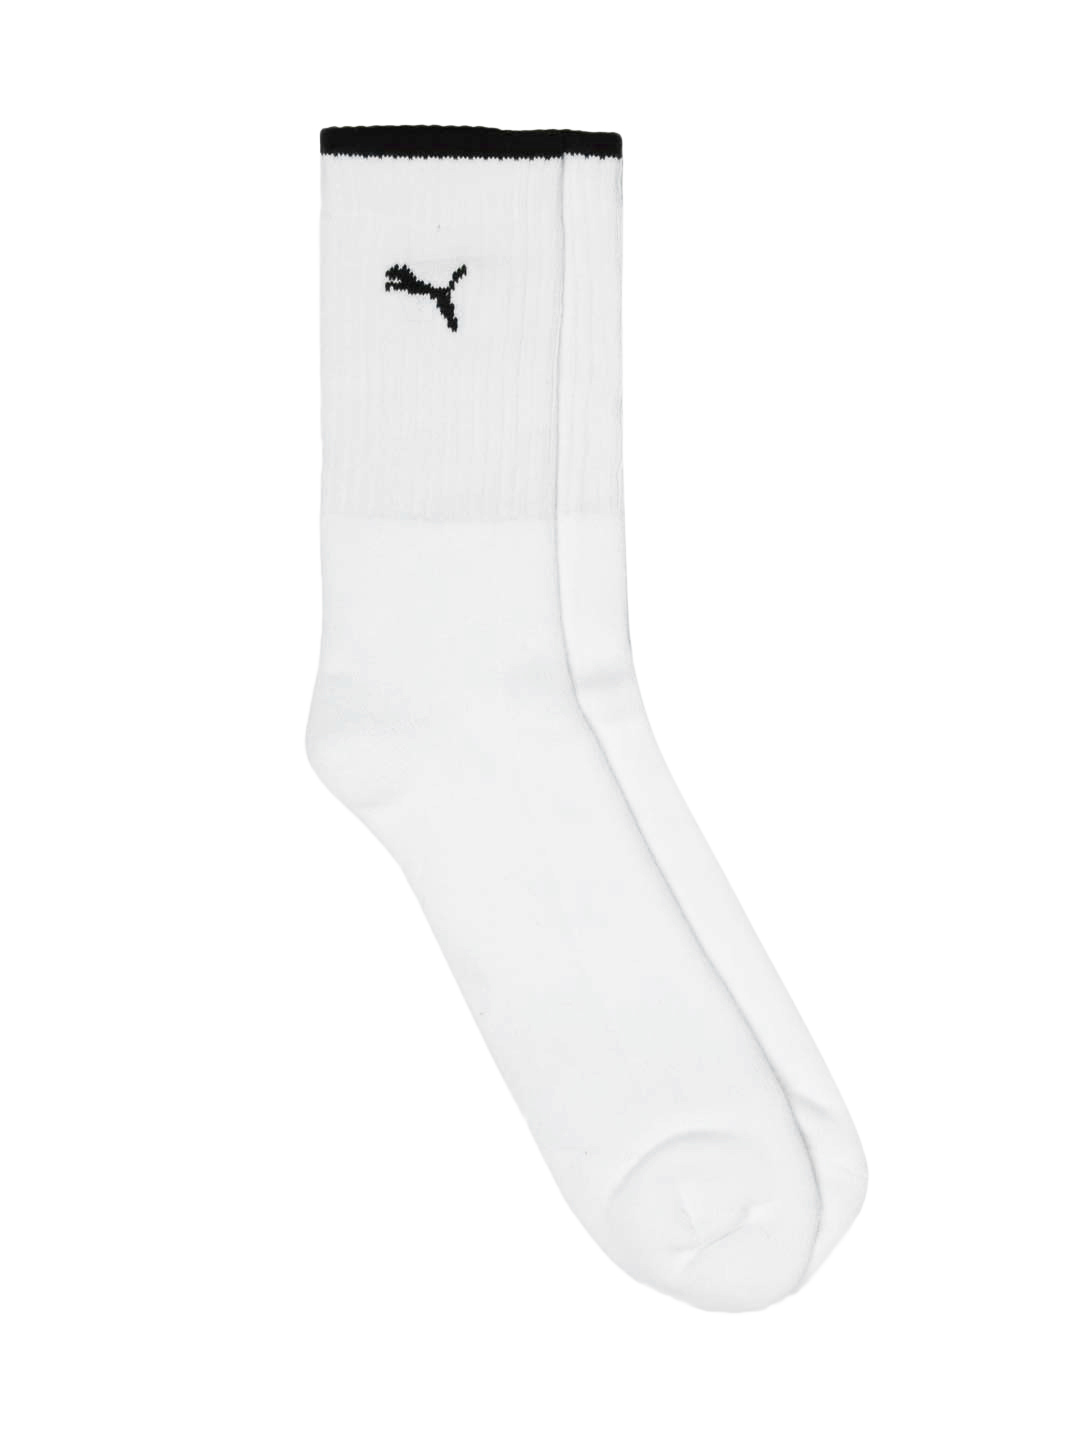 a white sock